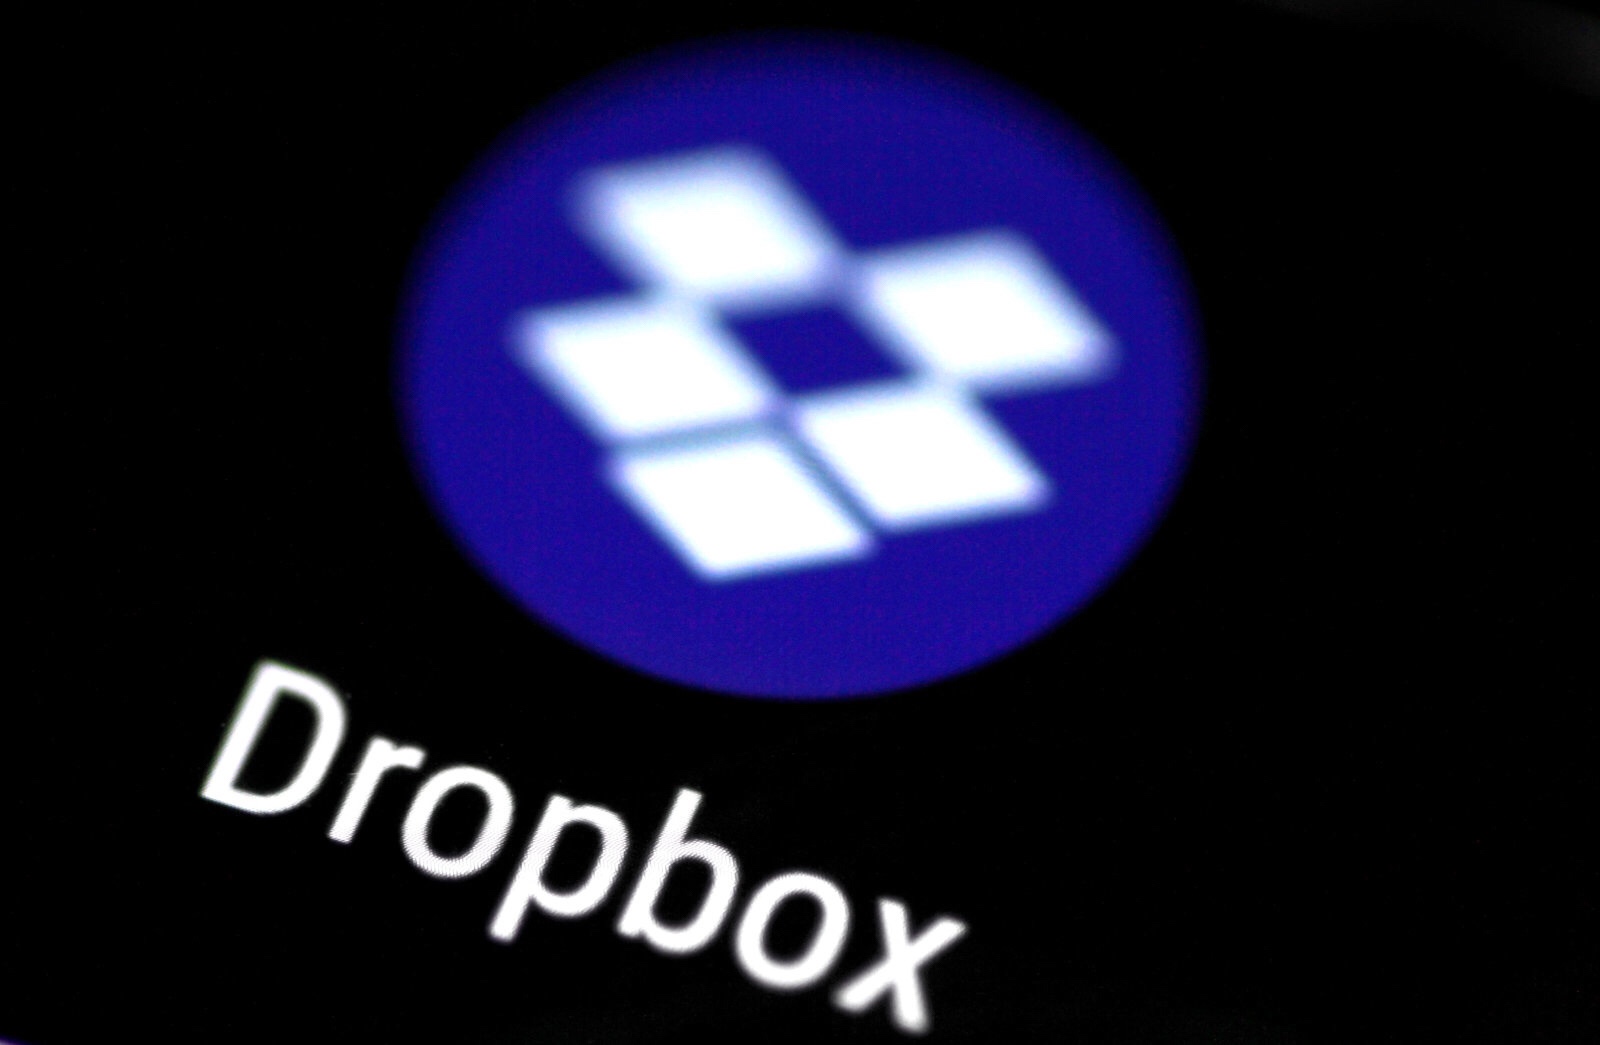 After a decade, Dropbox finally decided to go public